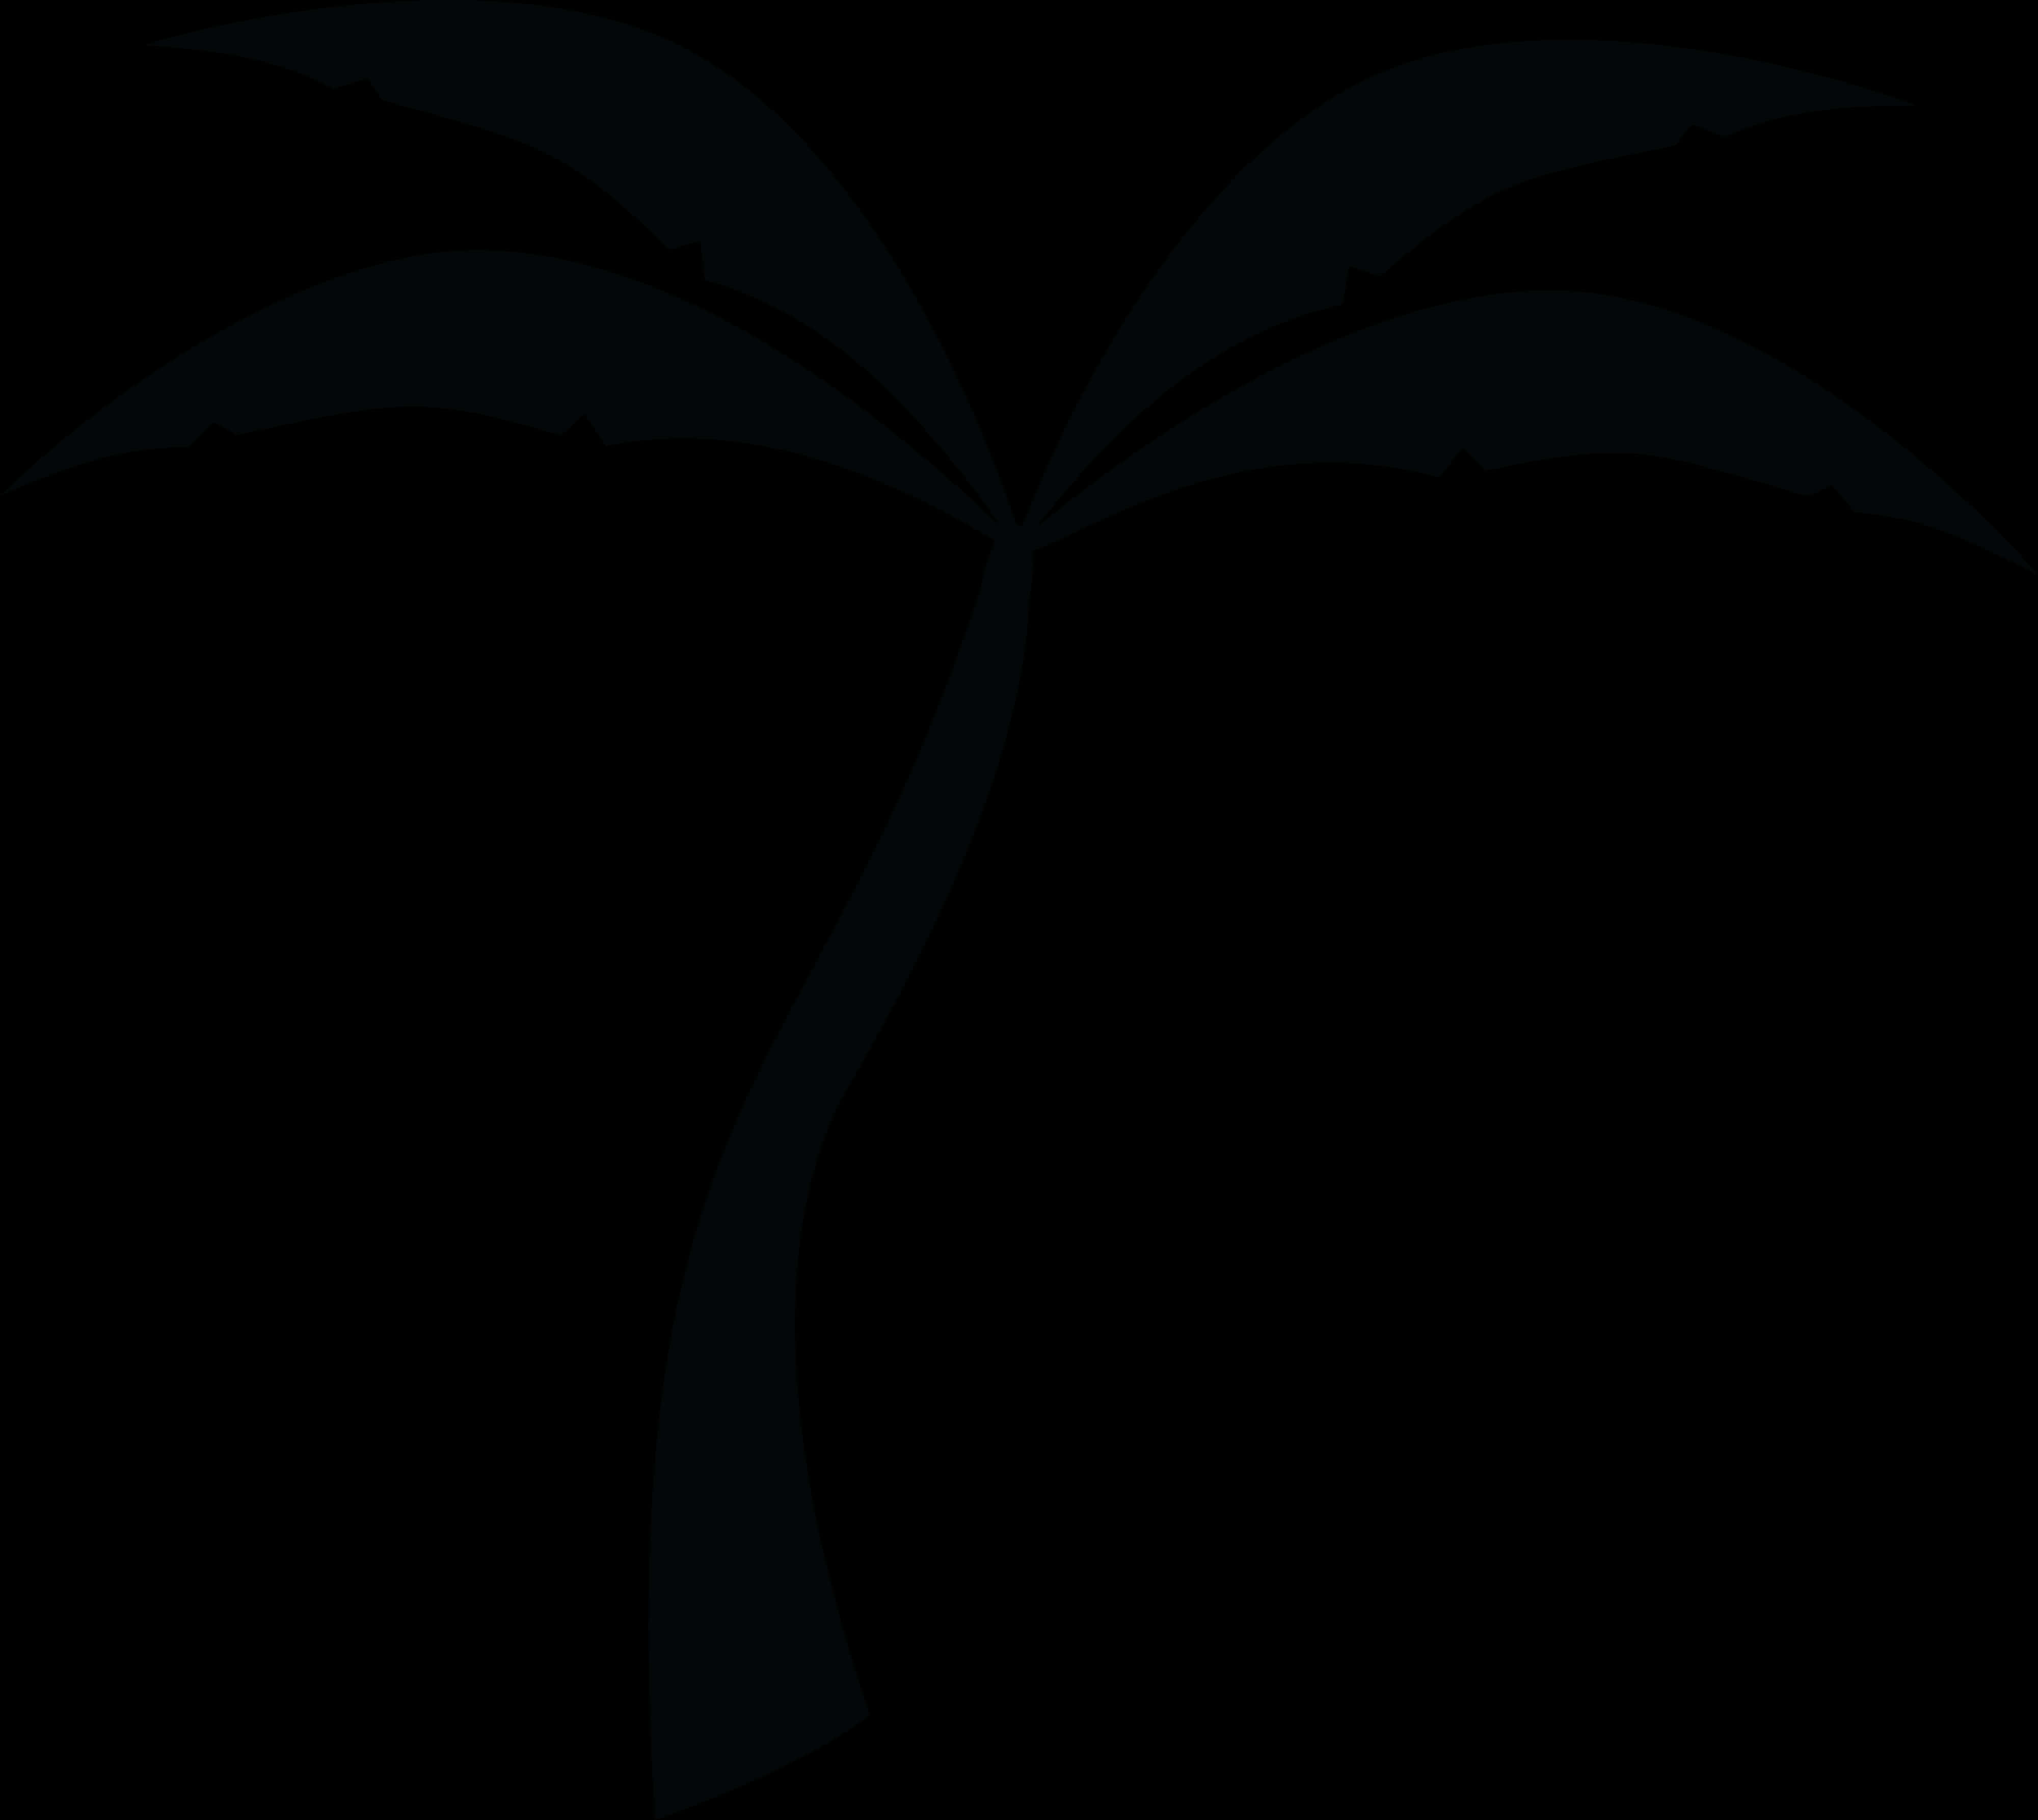 A Black Palm Tree Silhouette